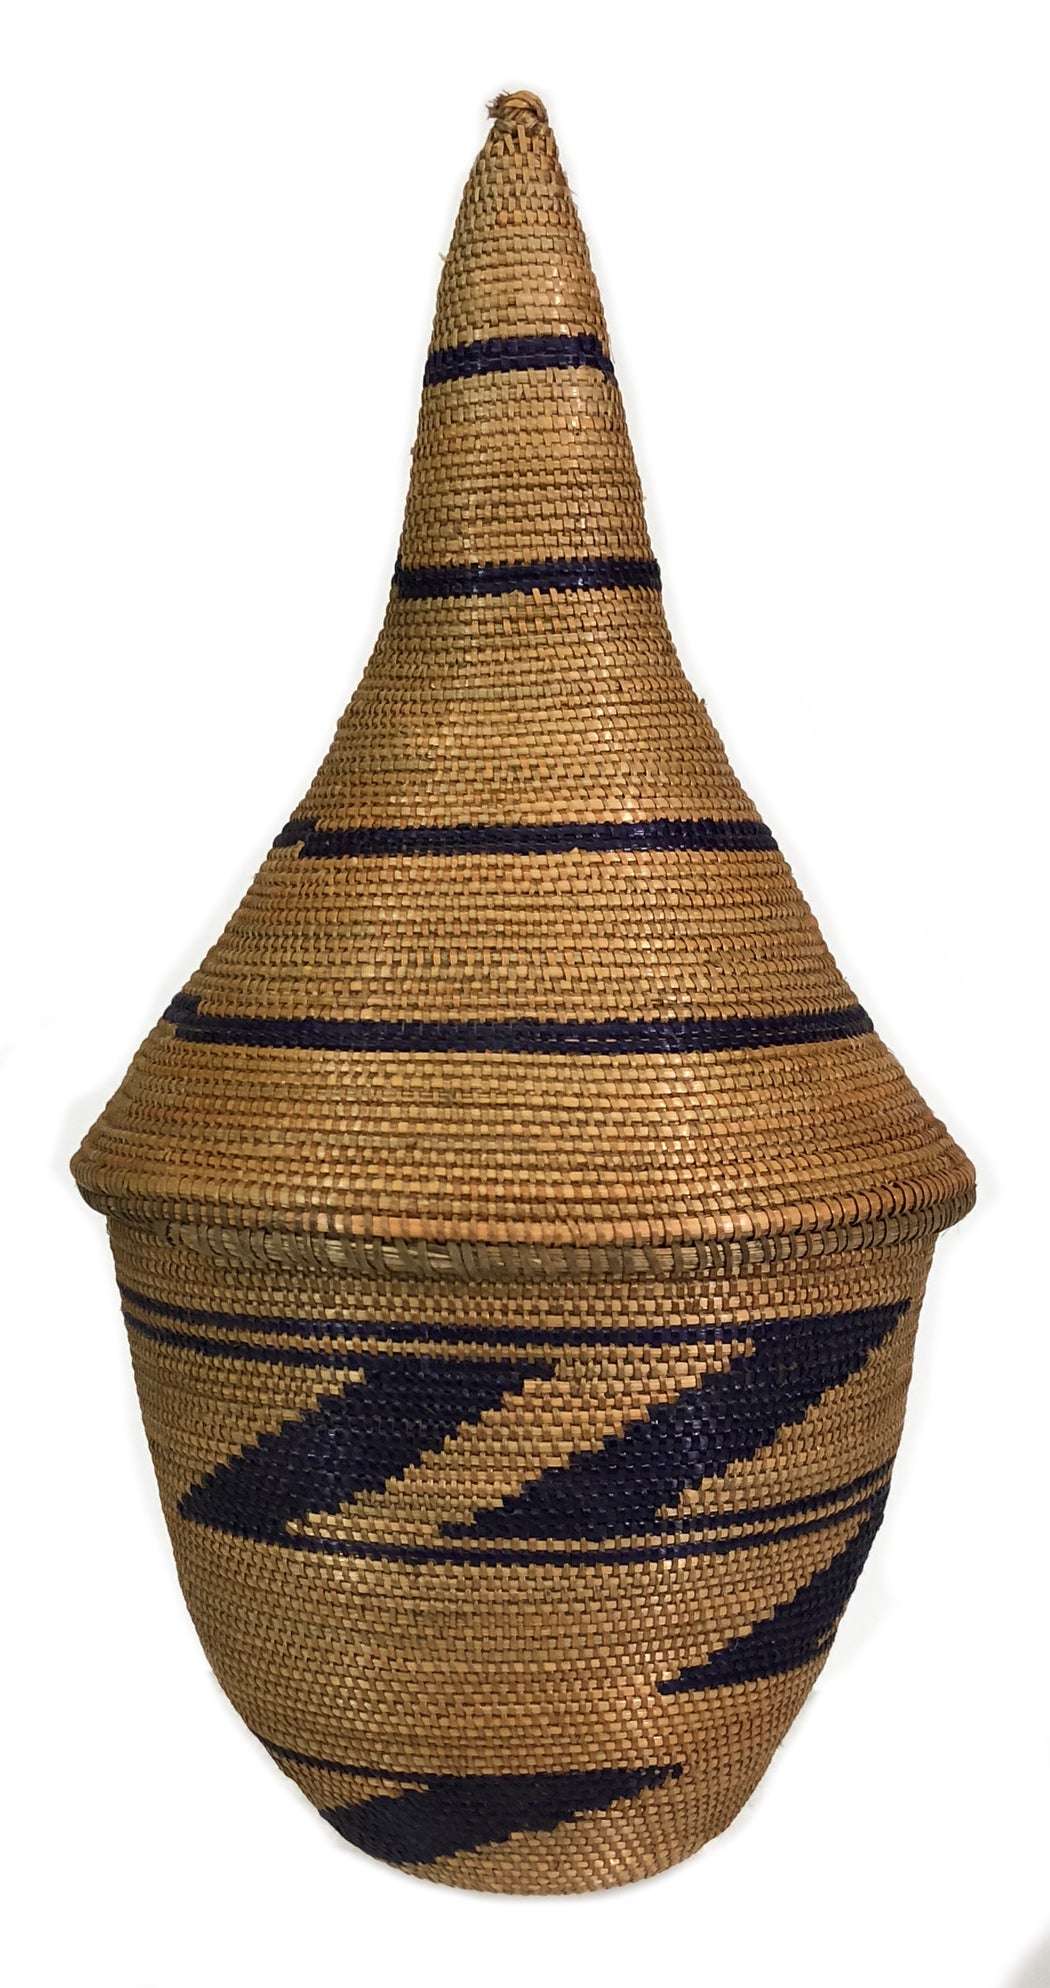 Small Vintage Tutsi Decor Basket with Indigo Accents - 7" x 3.5" - Niger Bend